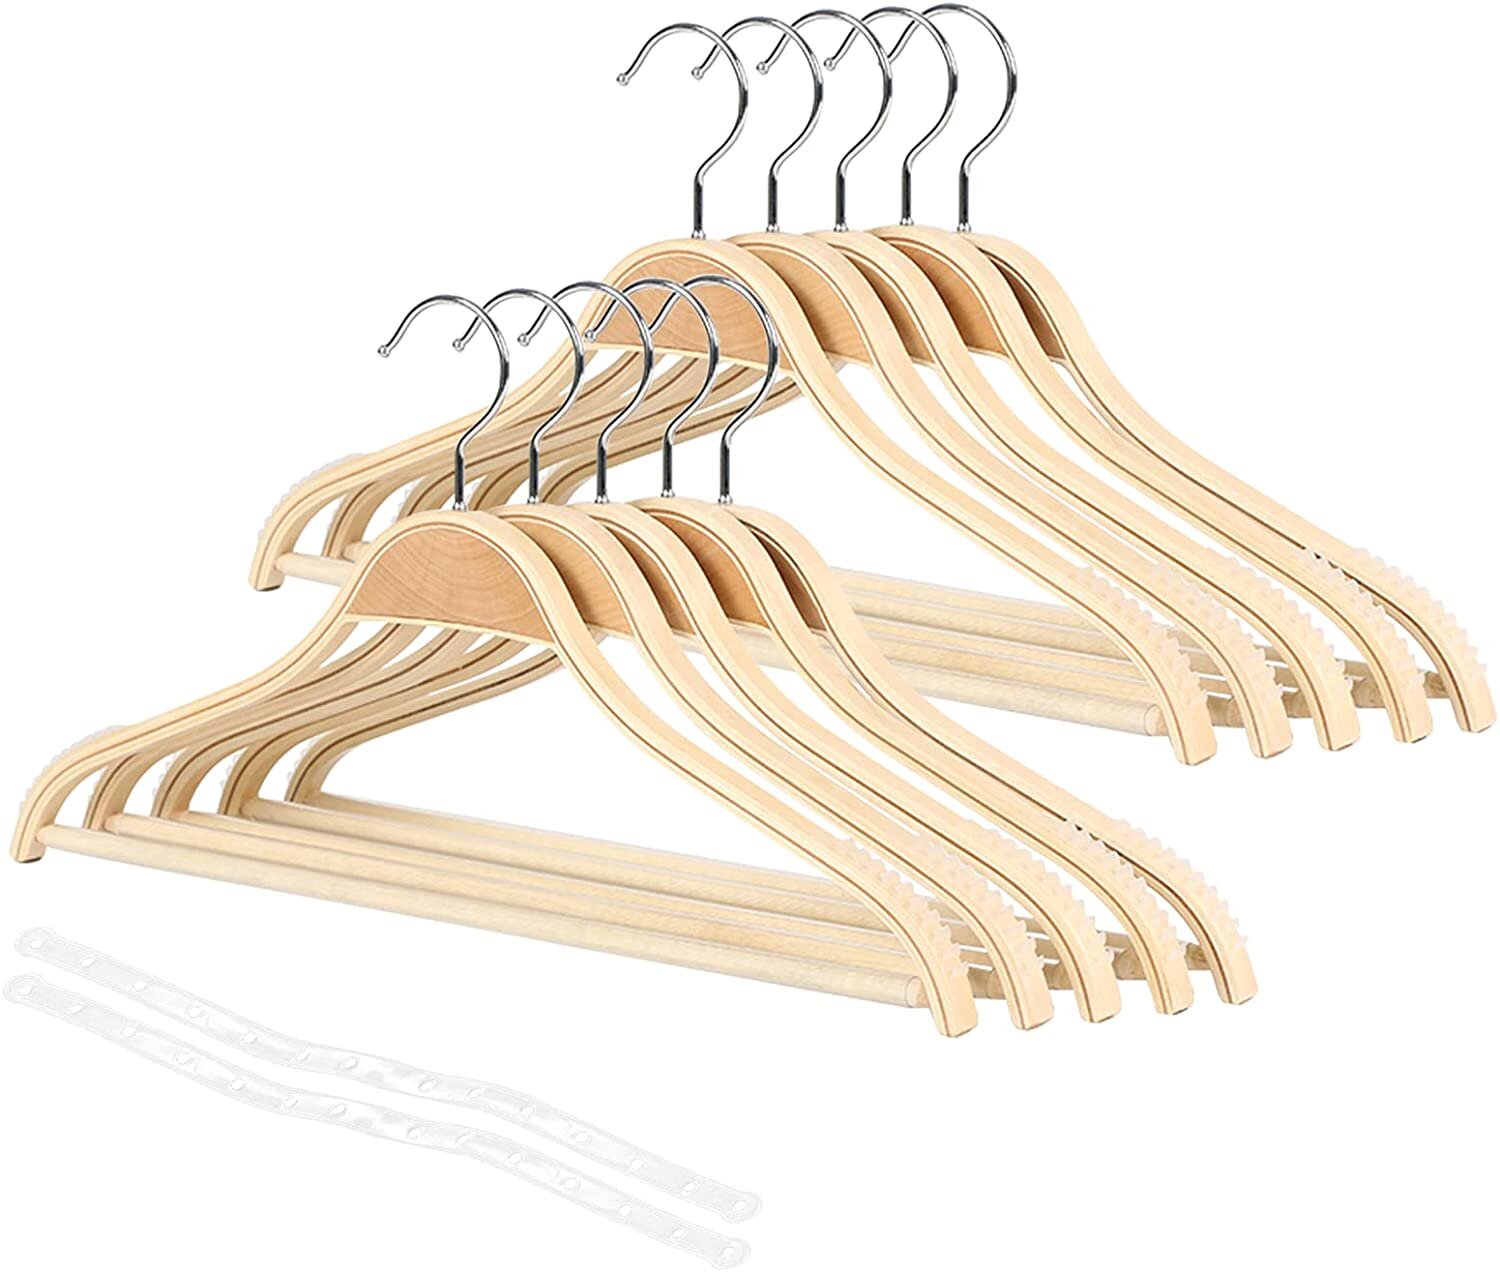 Wooden Pant Hanger Suit Skirt Clothes Wood Hangers Set of 3 New 